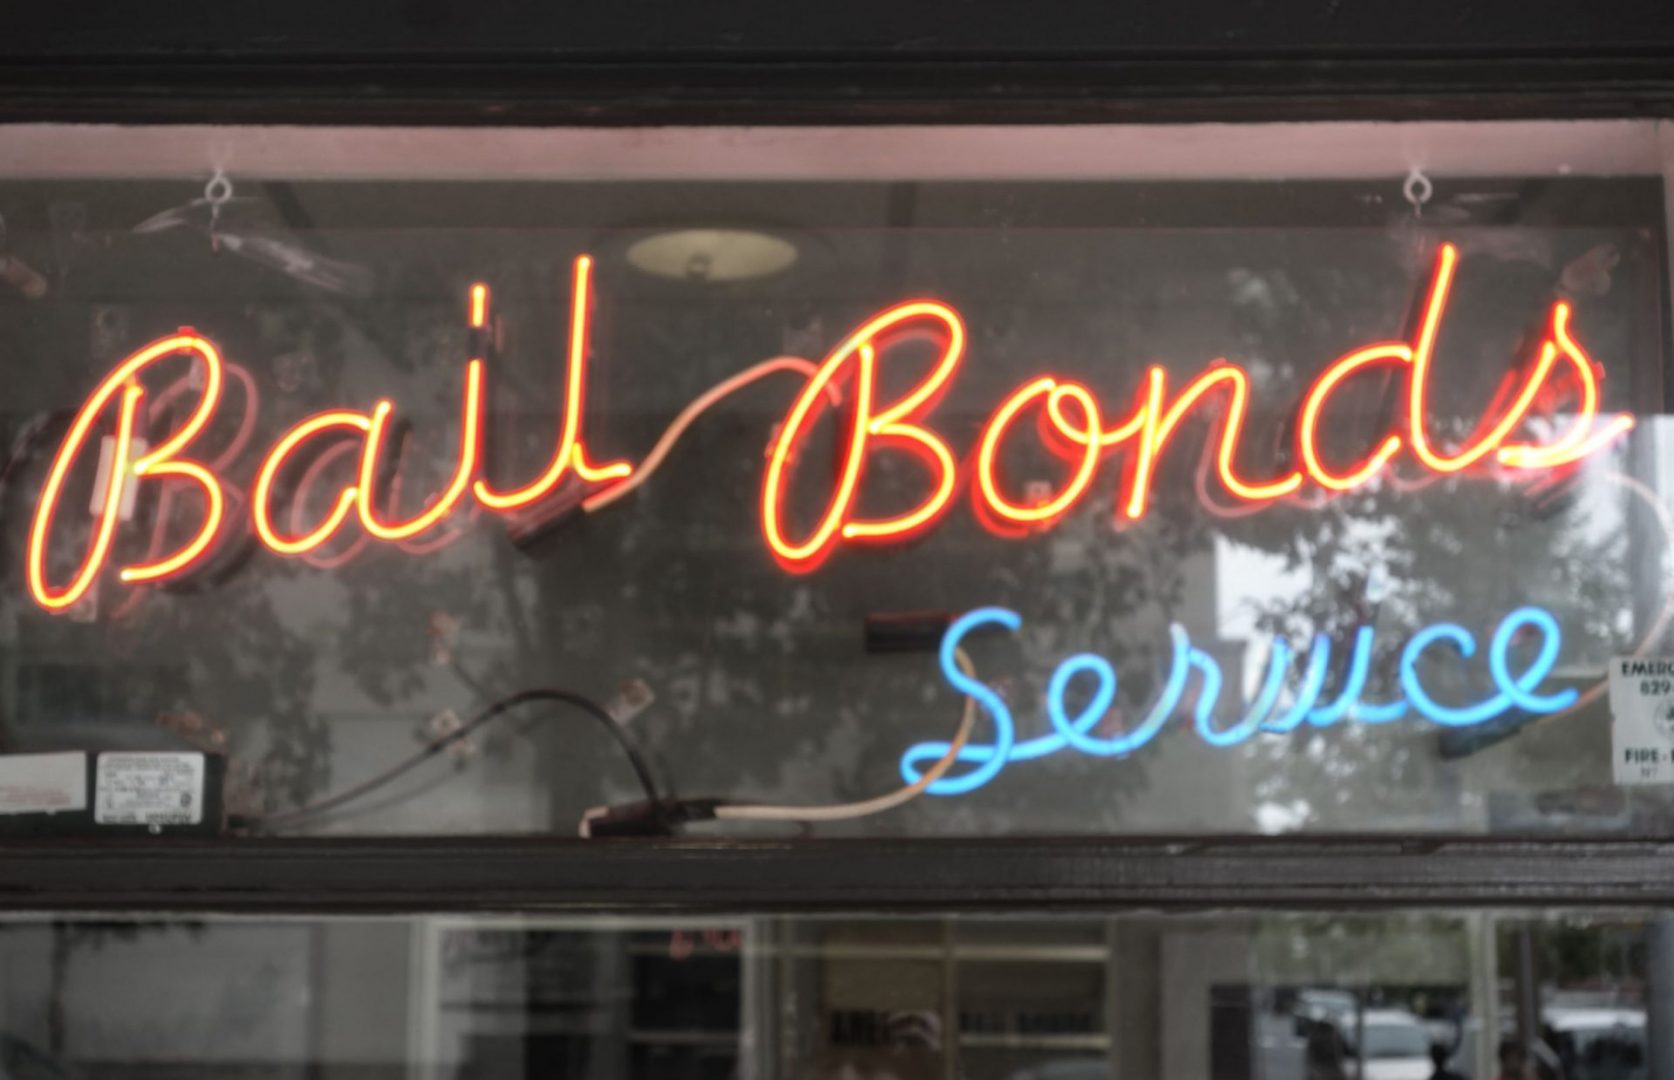 Bail bonds service